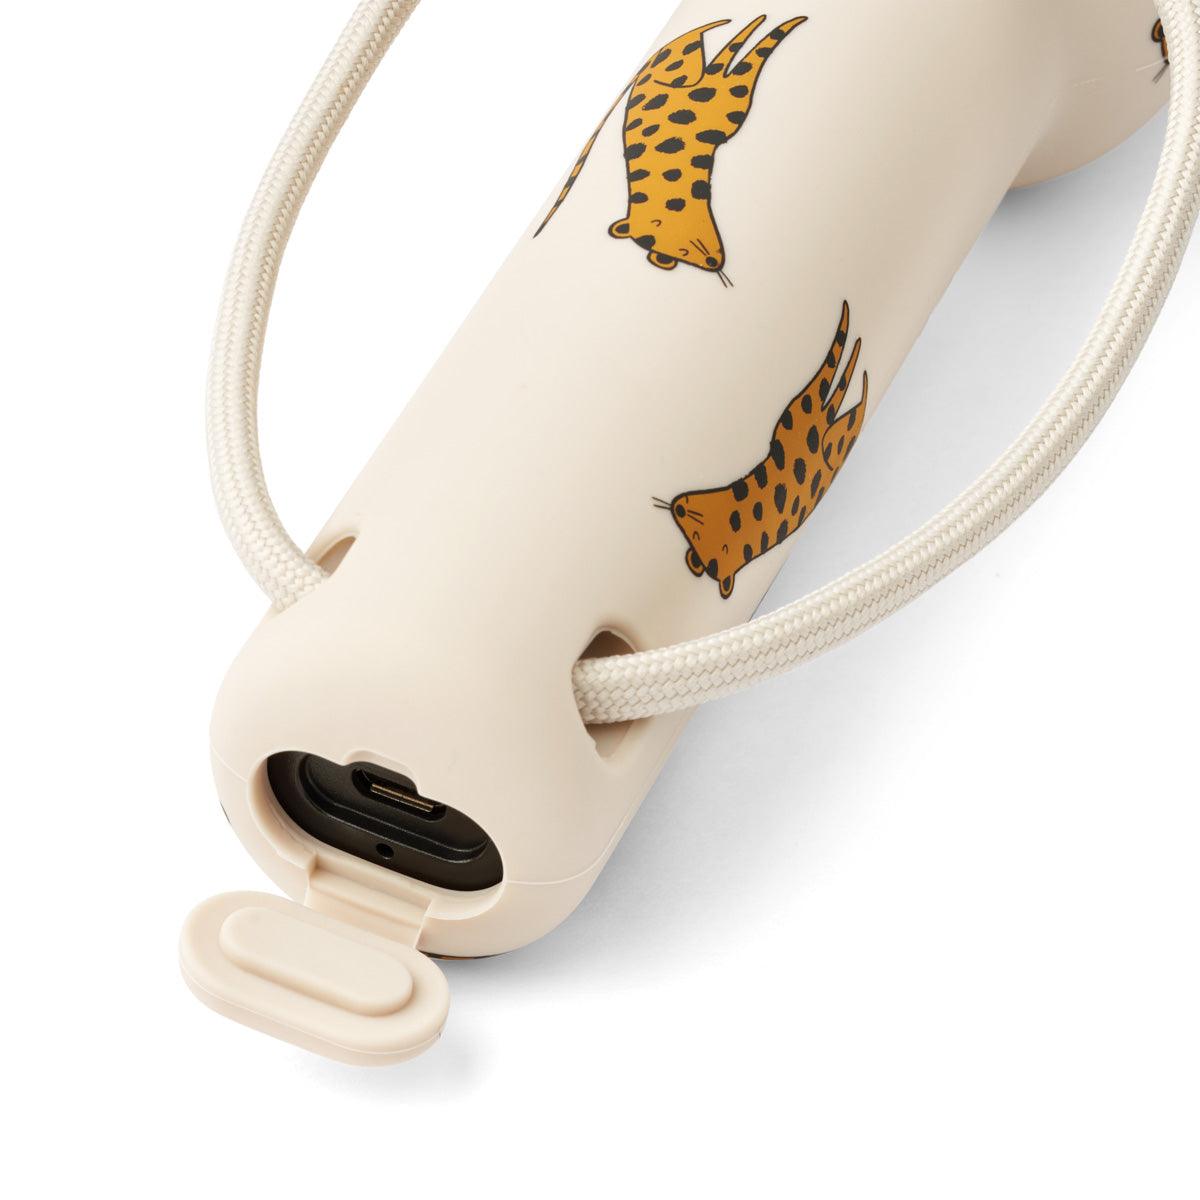 Taschenlampe für Kinder Gry - Nook' d' Mel - Kinder Concept Store